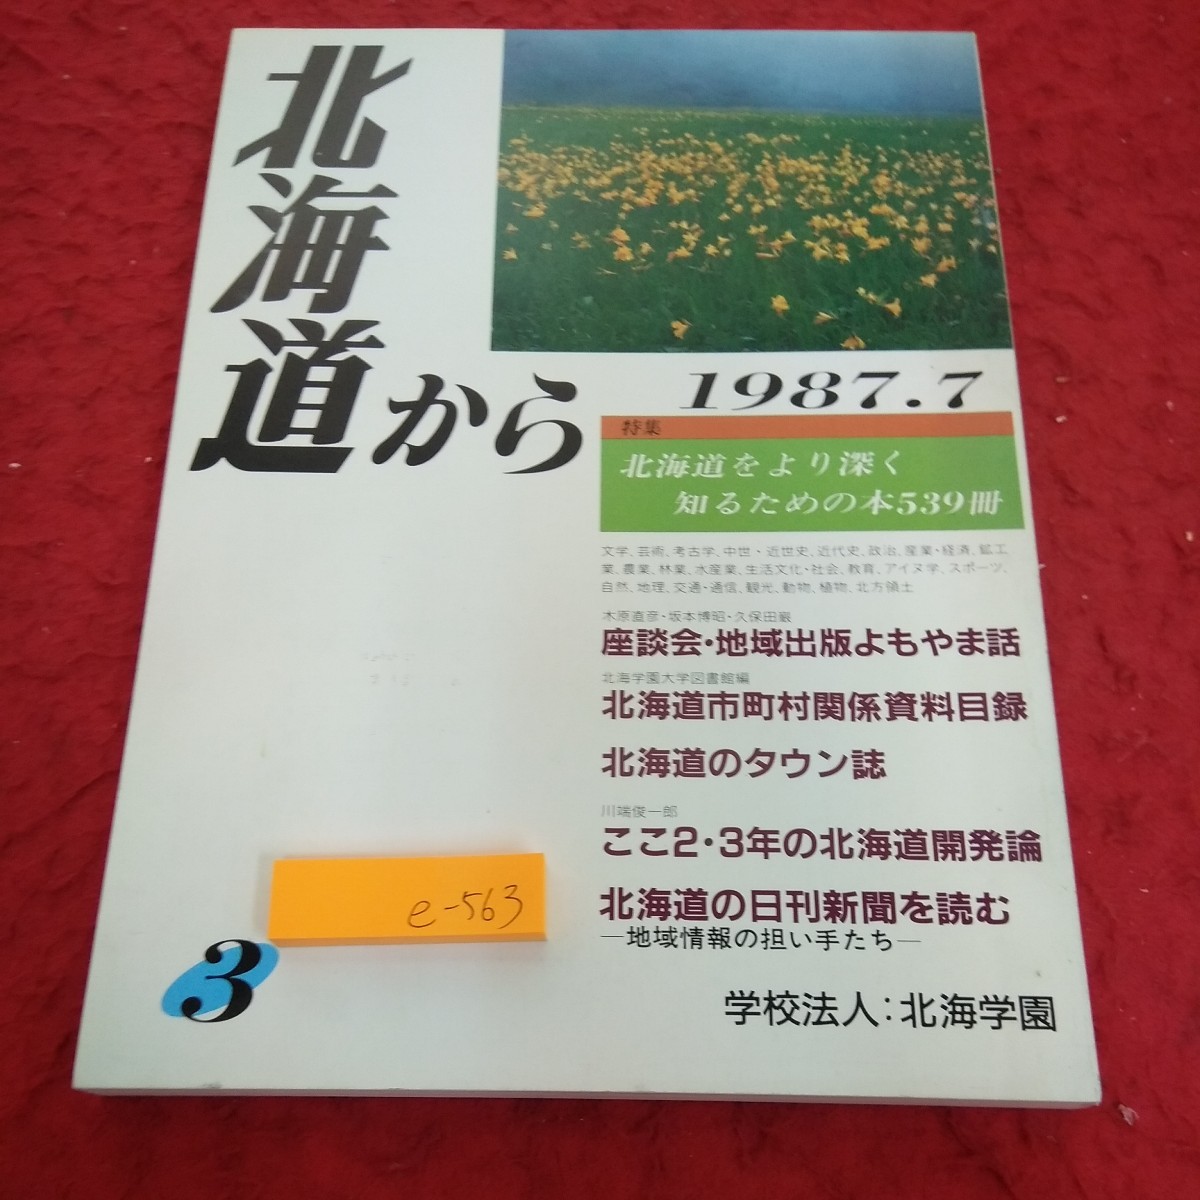 e-563 北海道から 1987年発行 特集 北海道をより深く知るための本539冊 地域出版よもやま話 市町村関係資料科目録 など 北海学園※1_傷、汚れあり